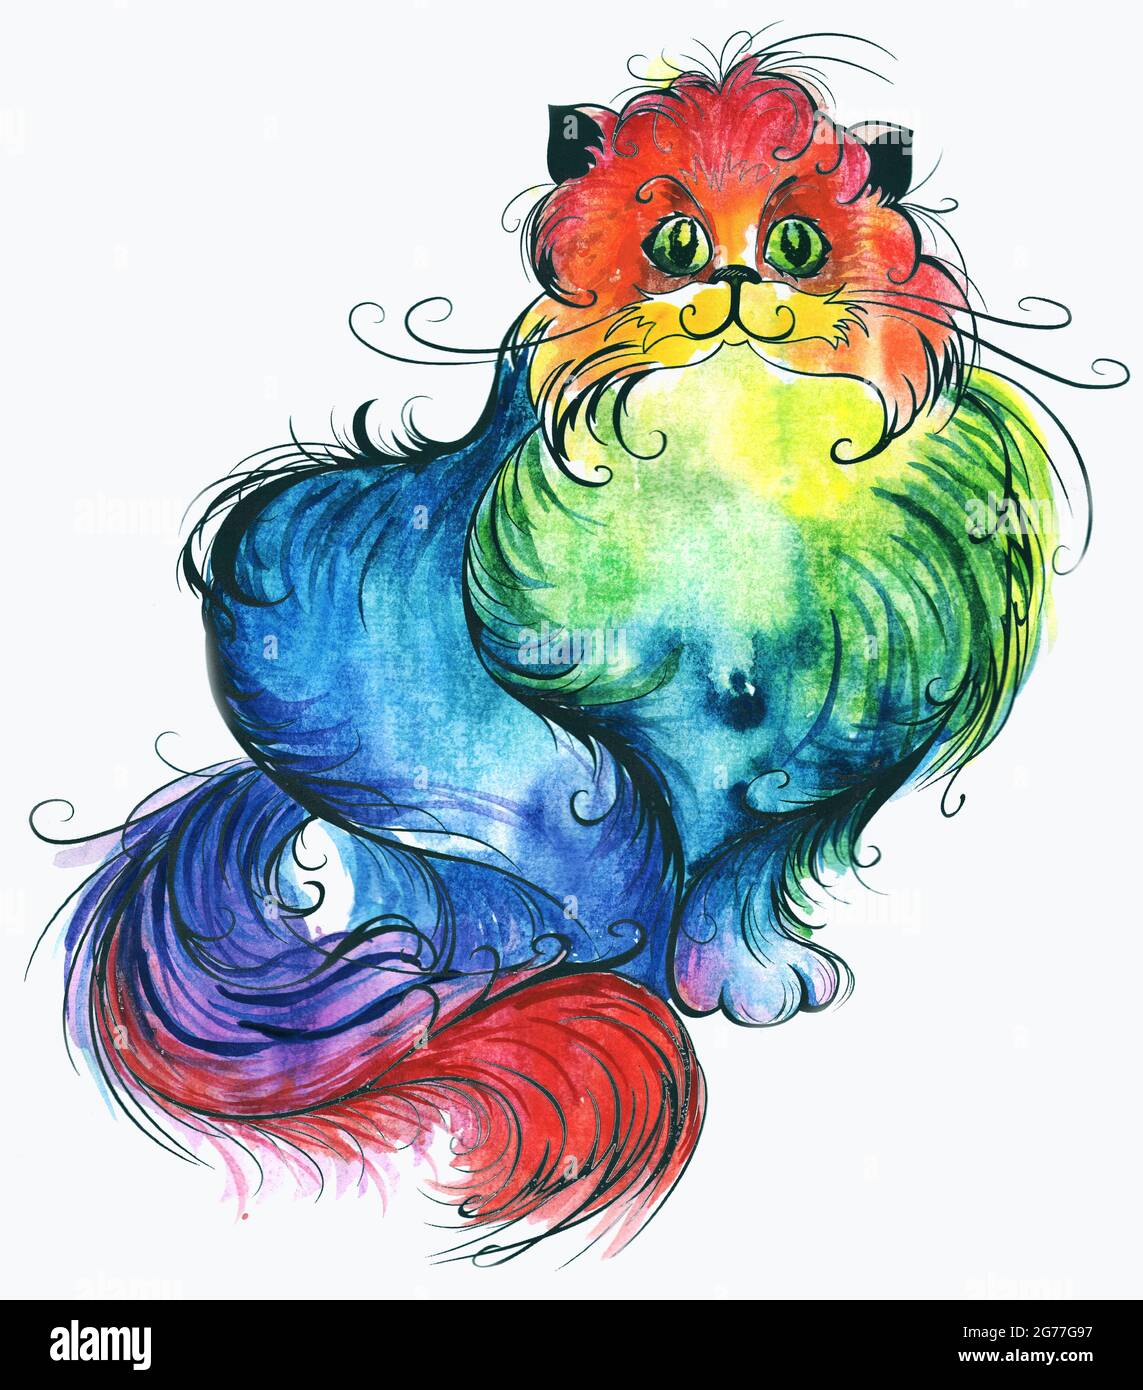 Flauschige Katze, bemalt mit bunten, regenbogenfarbenen, hellen Aquarellfarben. Stockfoto